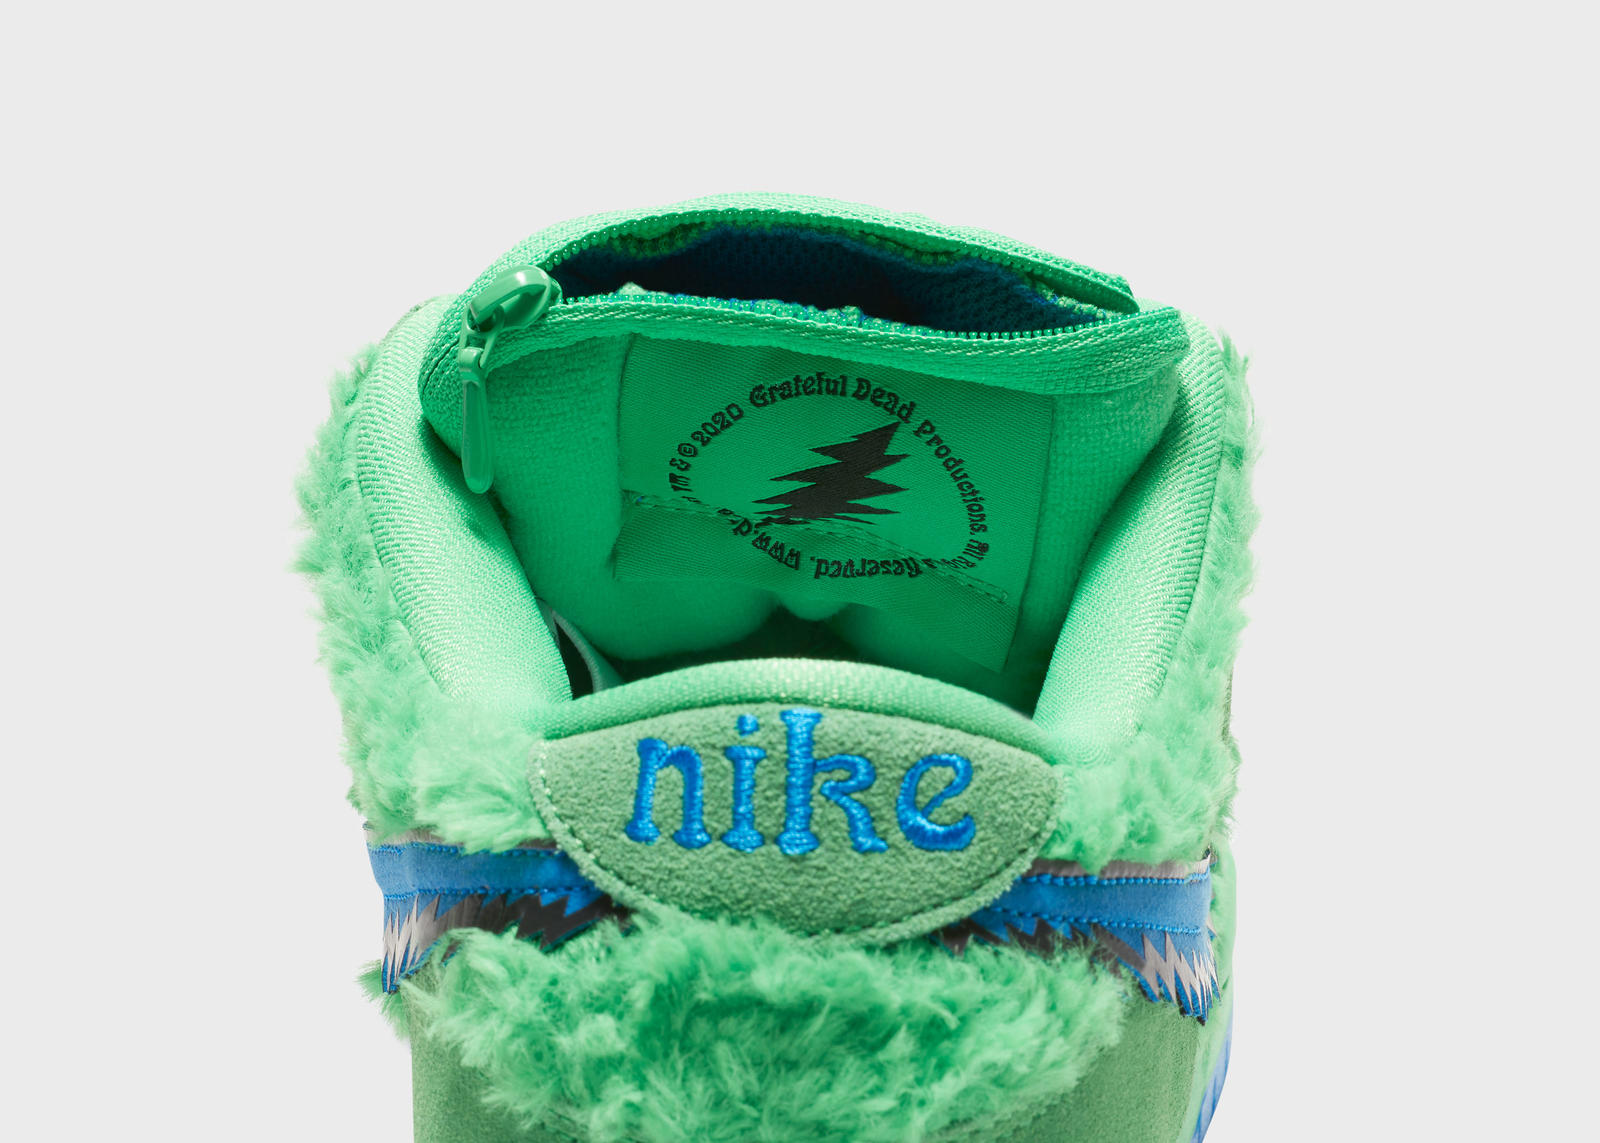 Nike SB Dunk Low Pro Green Spark 'Grateful Dead' article image